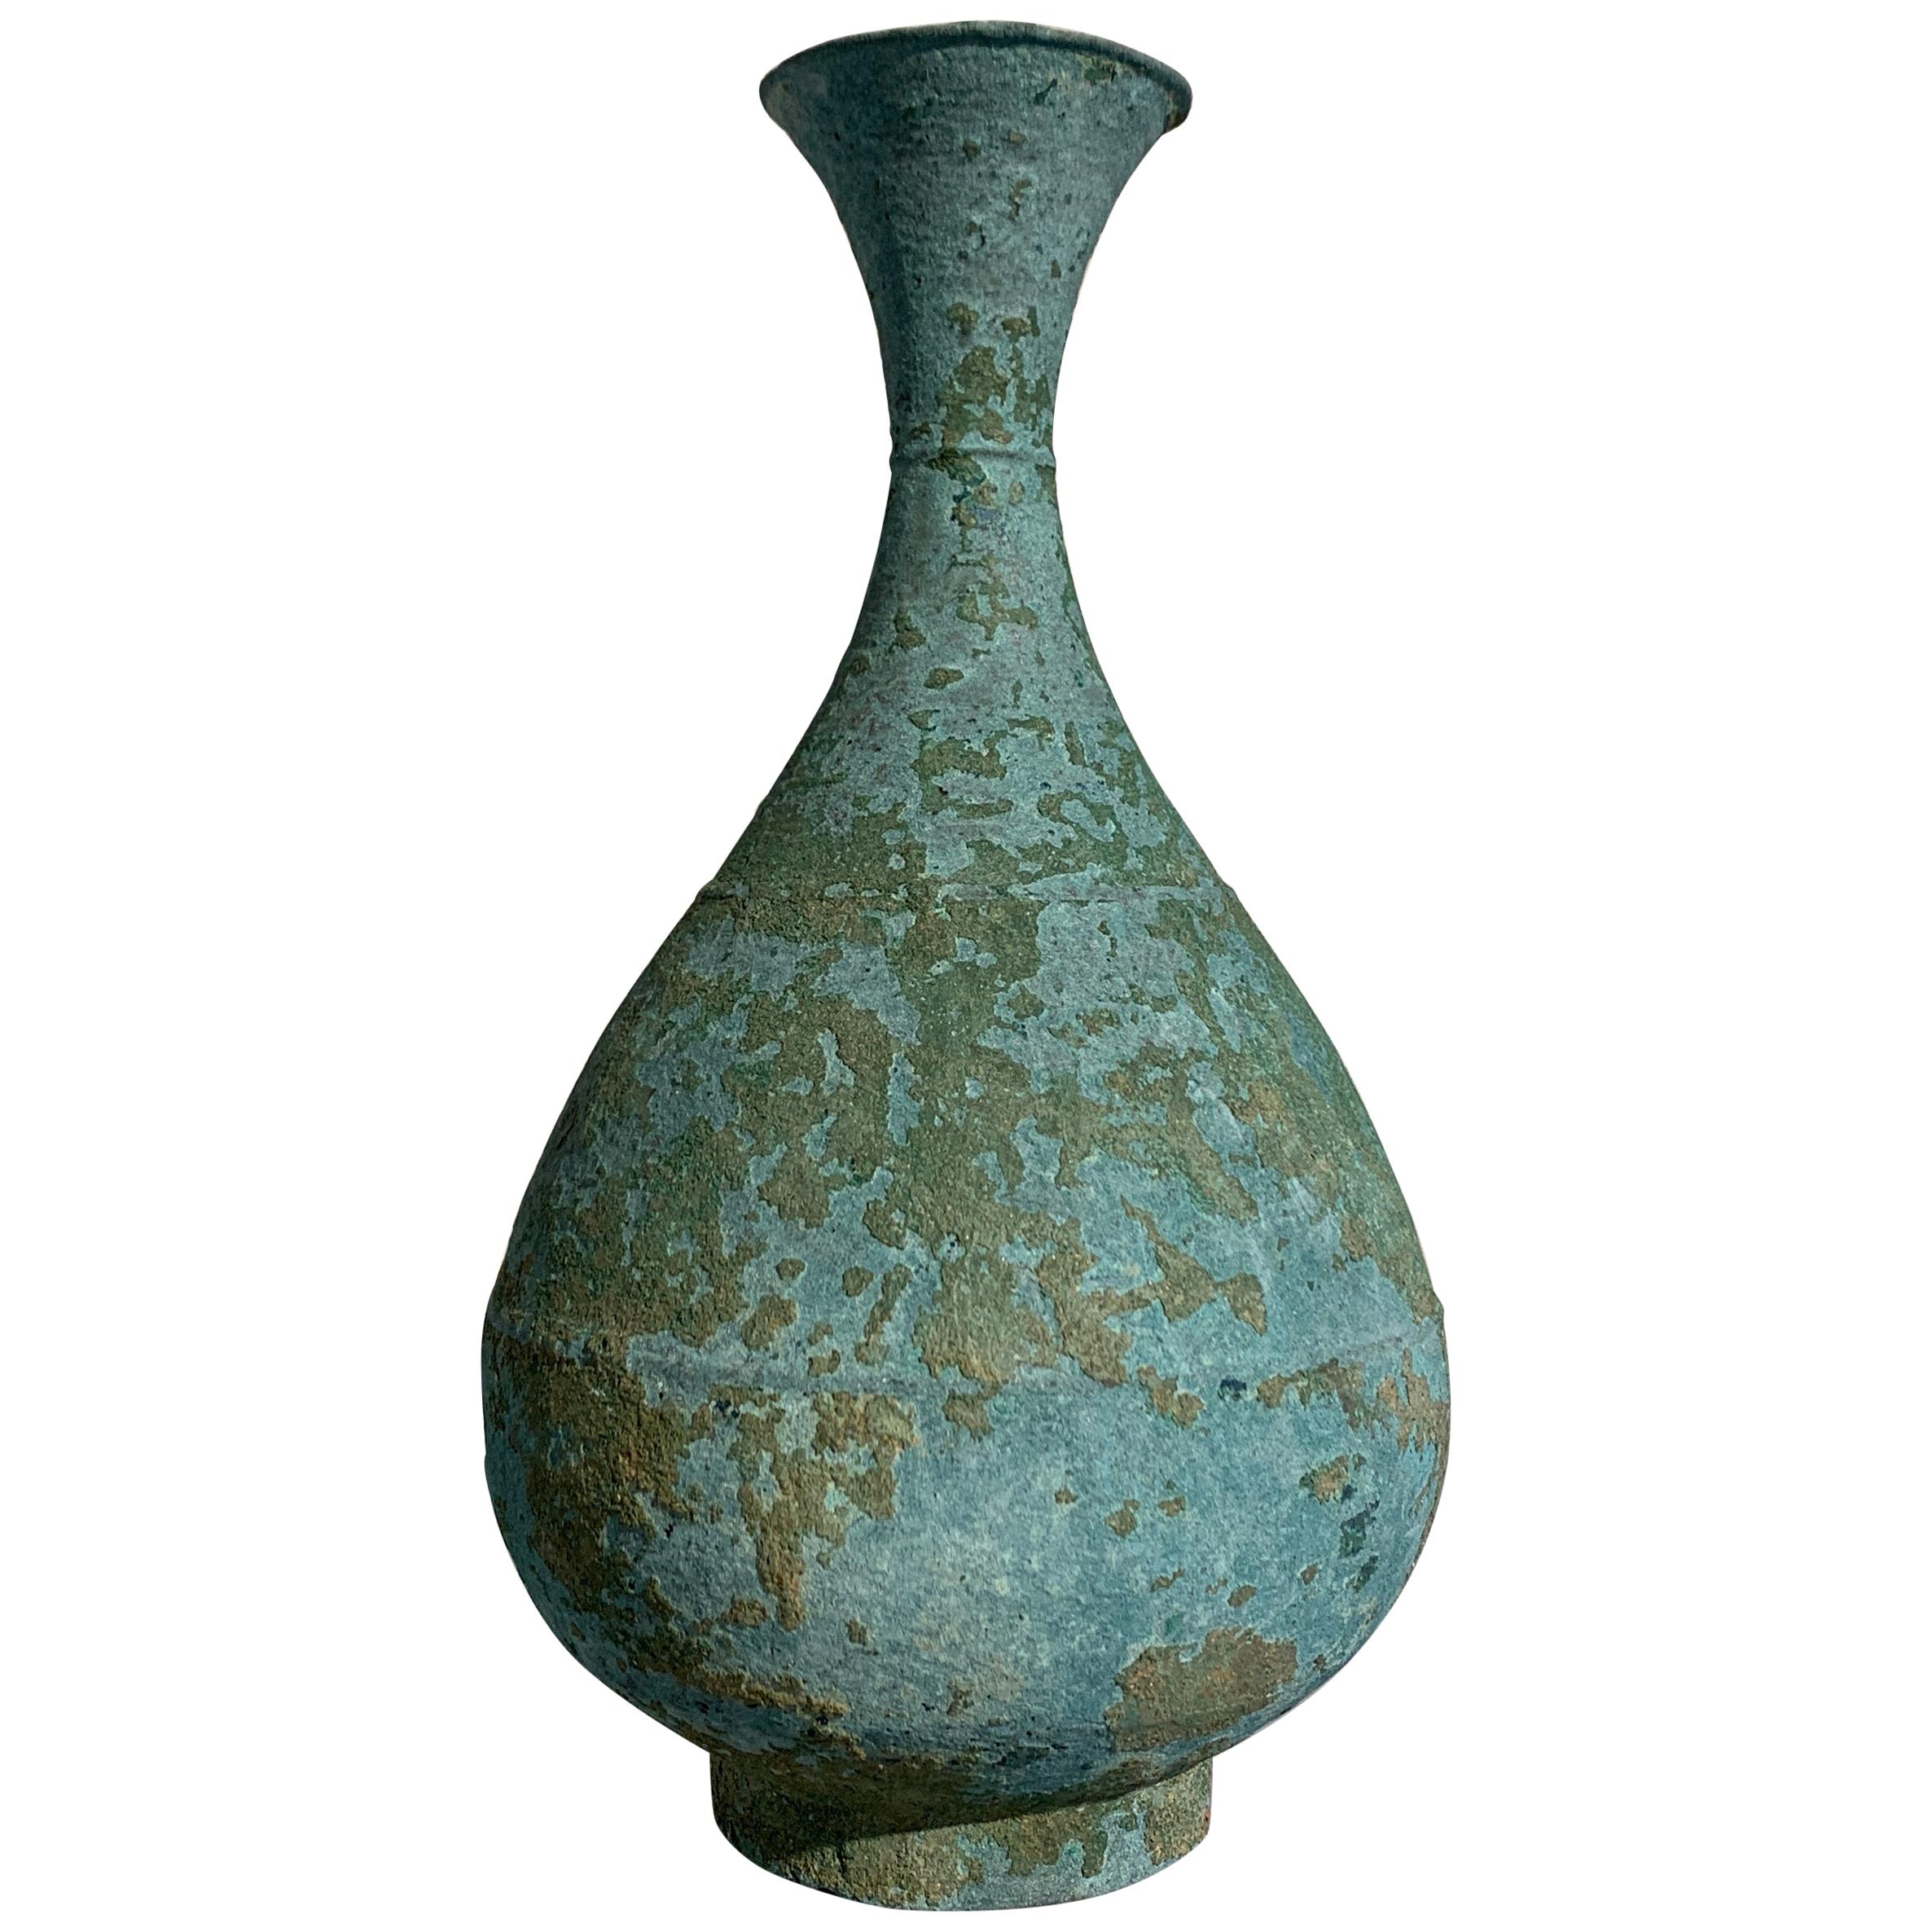 Korean Bronze Vase with Blue Green Patina, Goryeo Dynasty, 13th Century